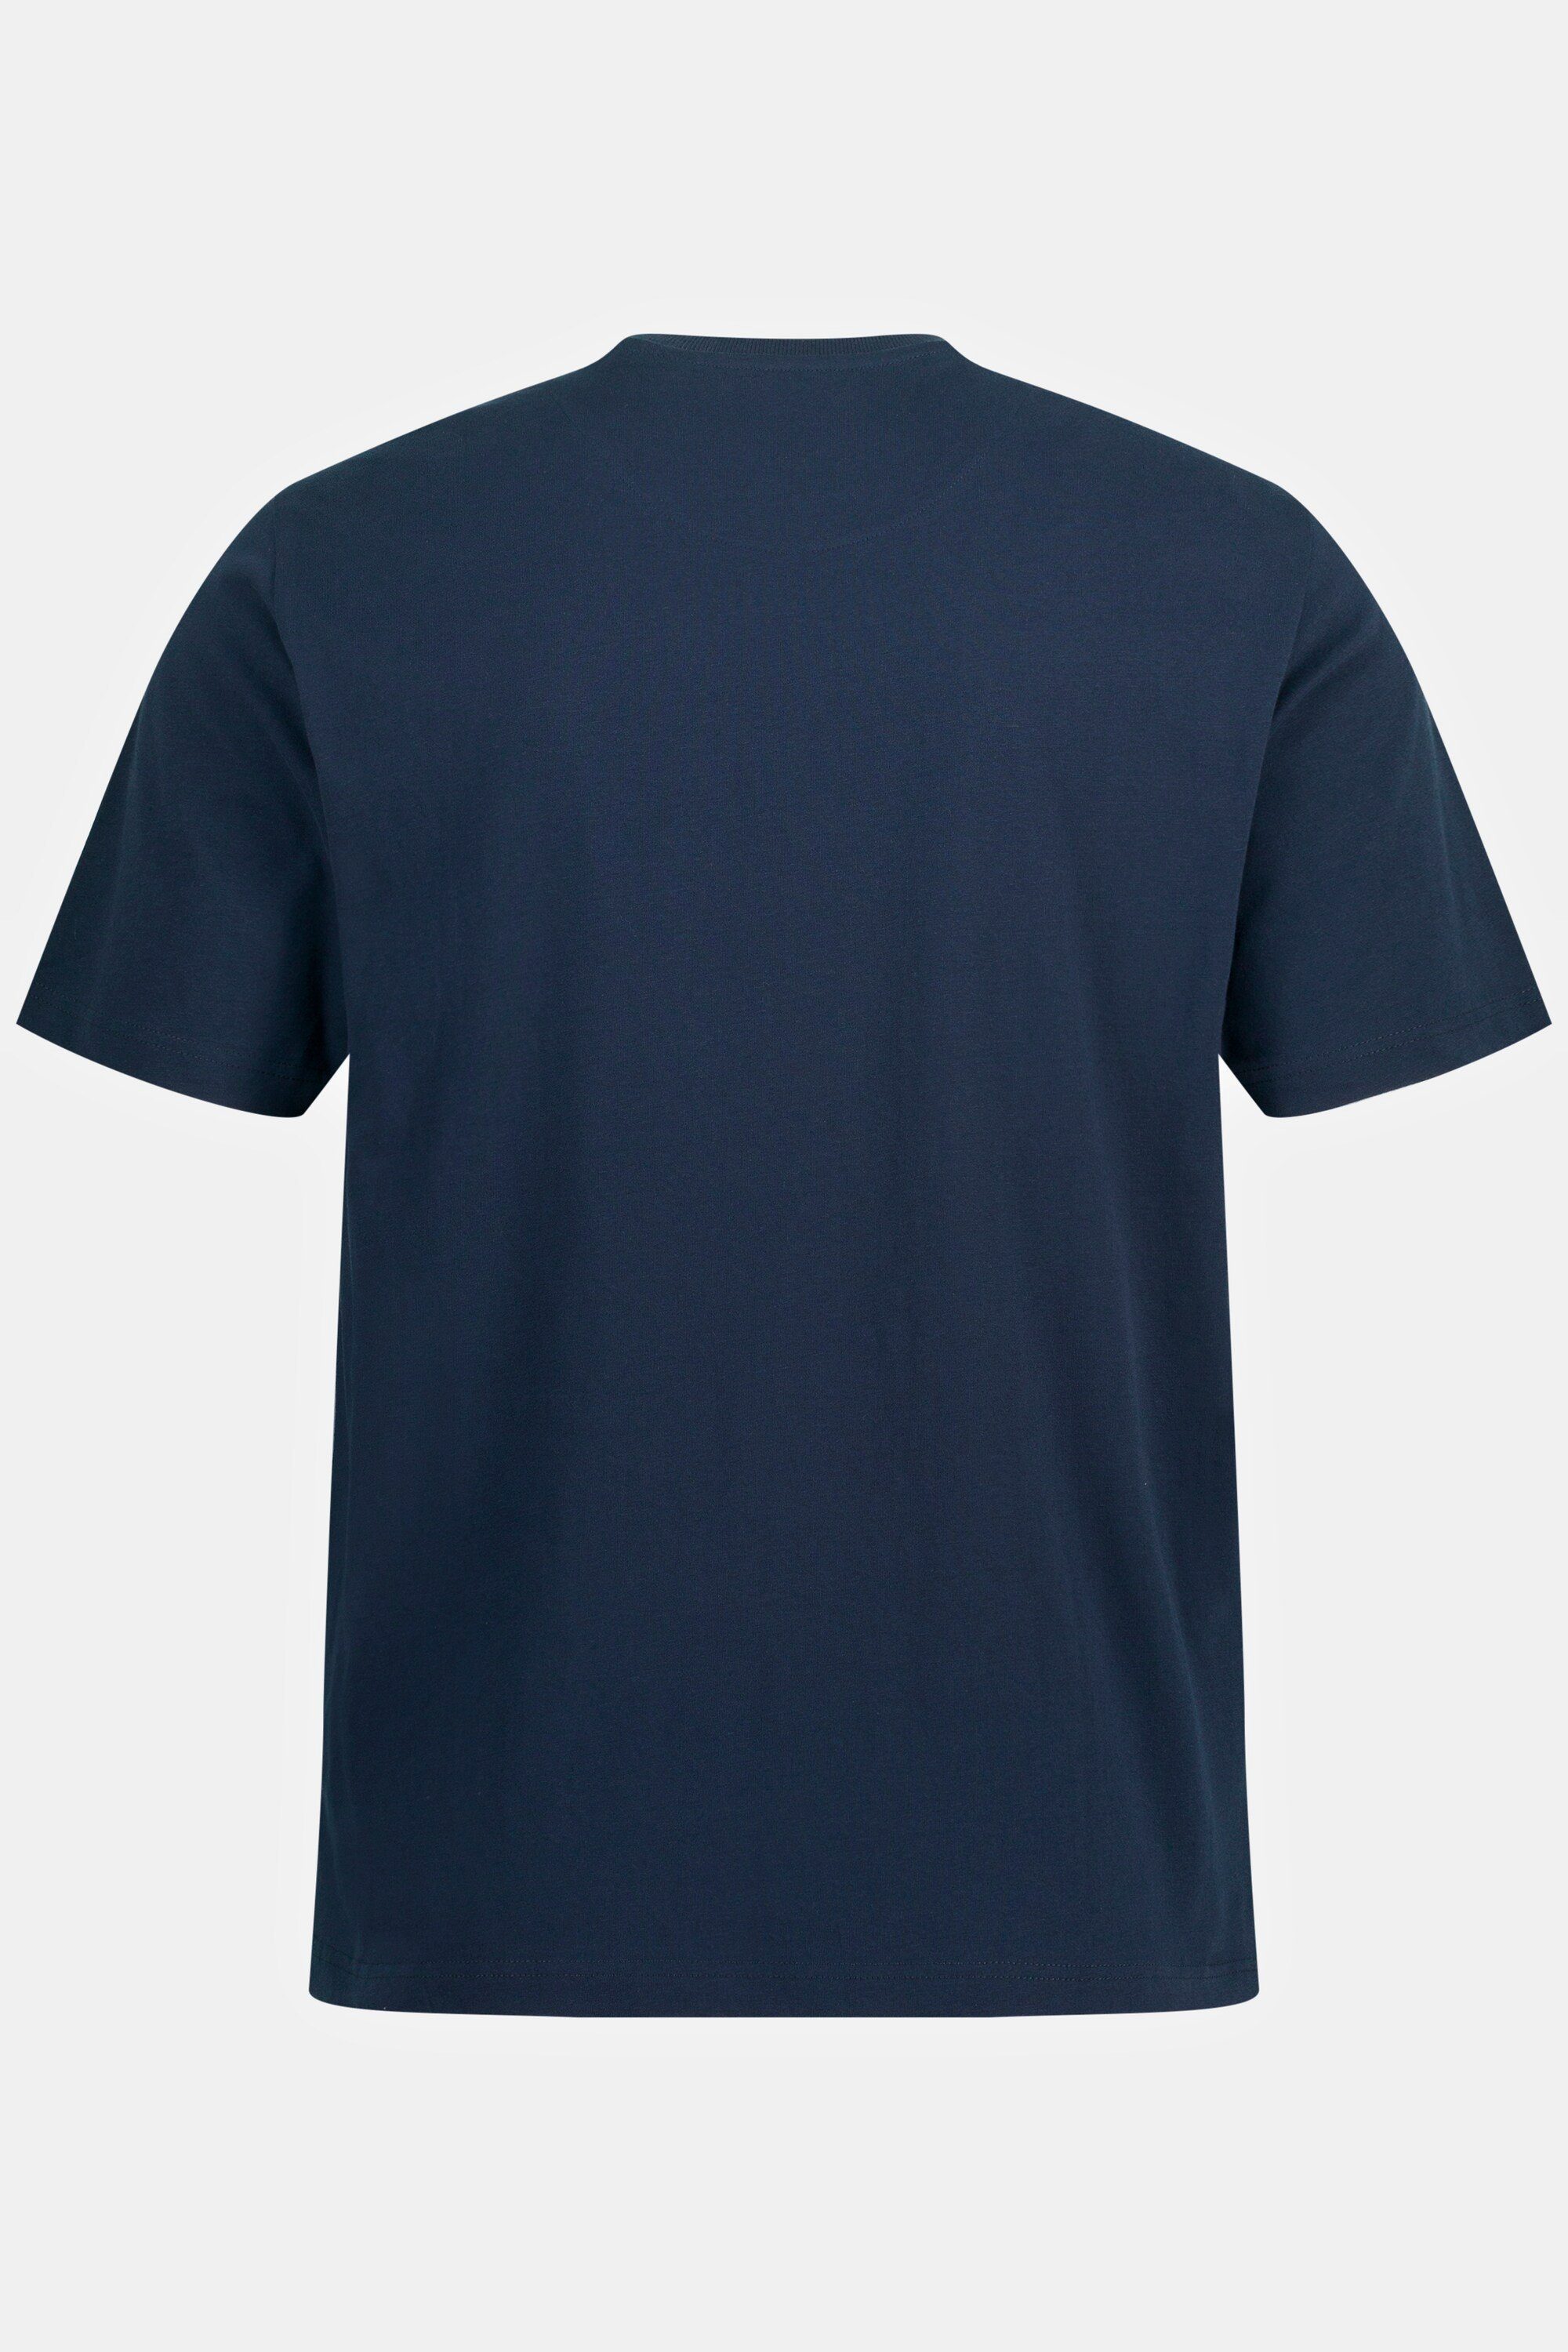 JP1880 T-Shirt Rundhals Halbarm T-Shirt Print Mexico